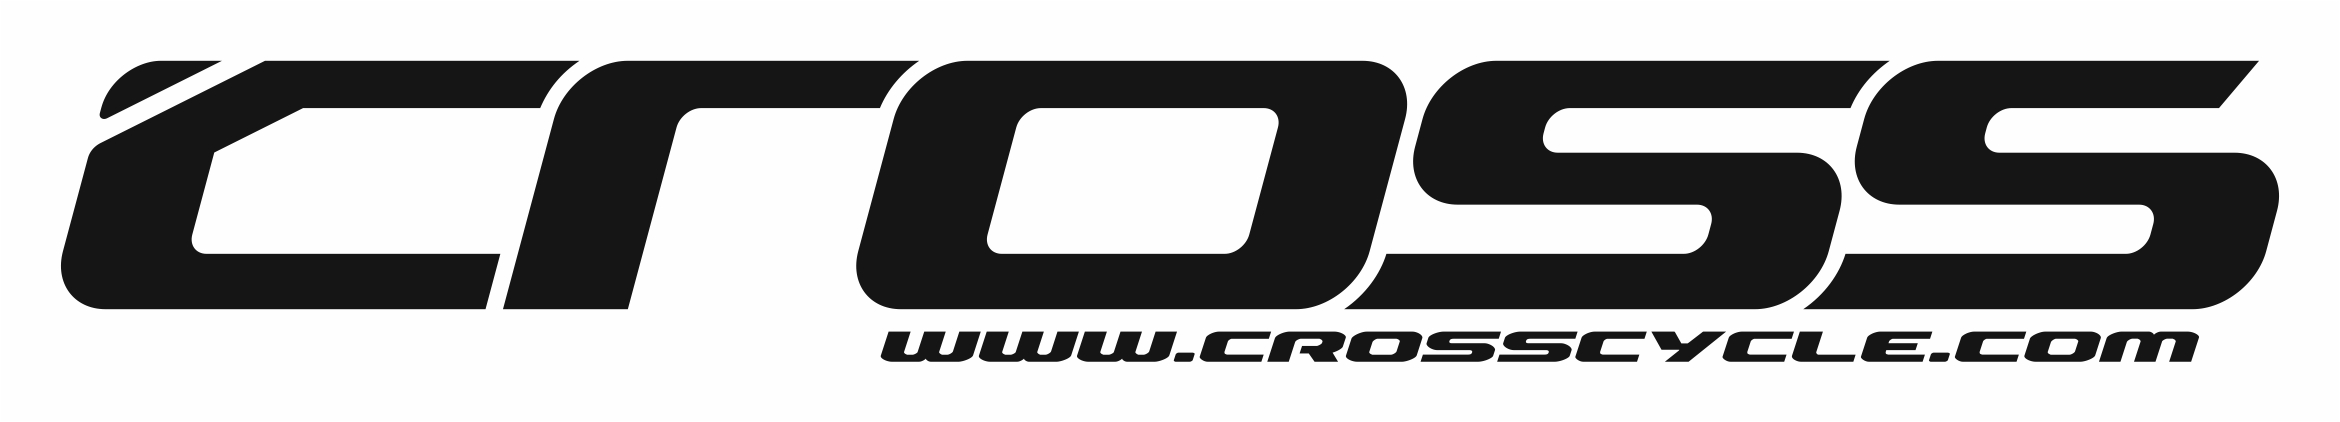 133-cross-logo-2016-with-website.jpg